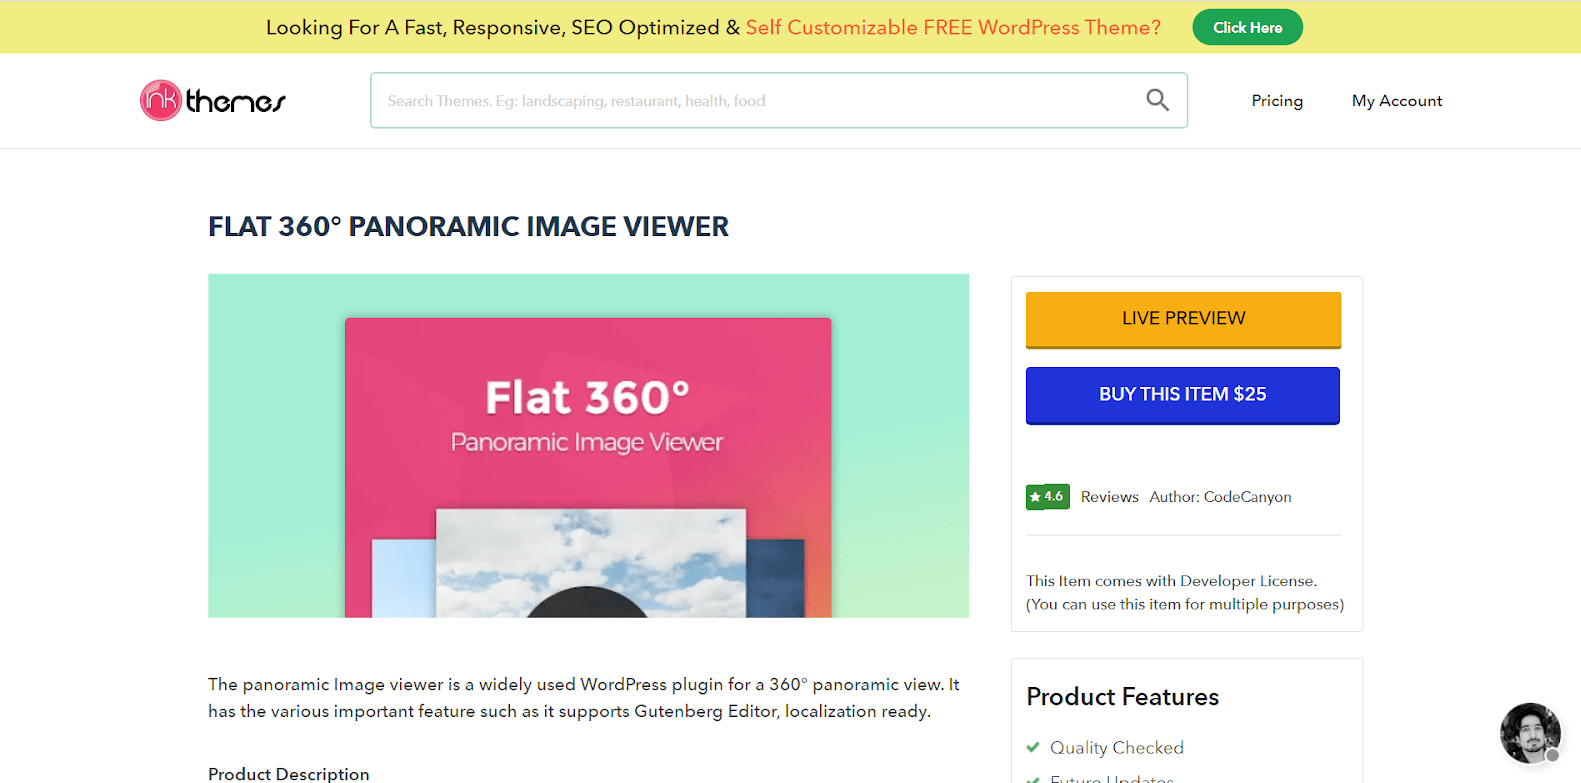 Flat 360° Panoramic Image Viewer